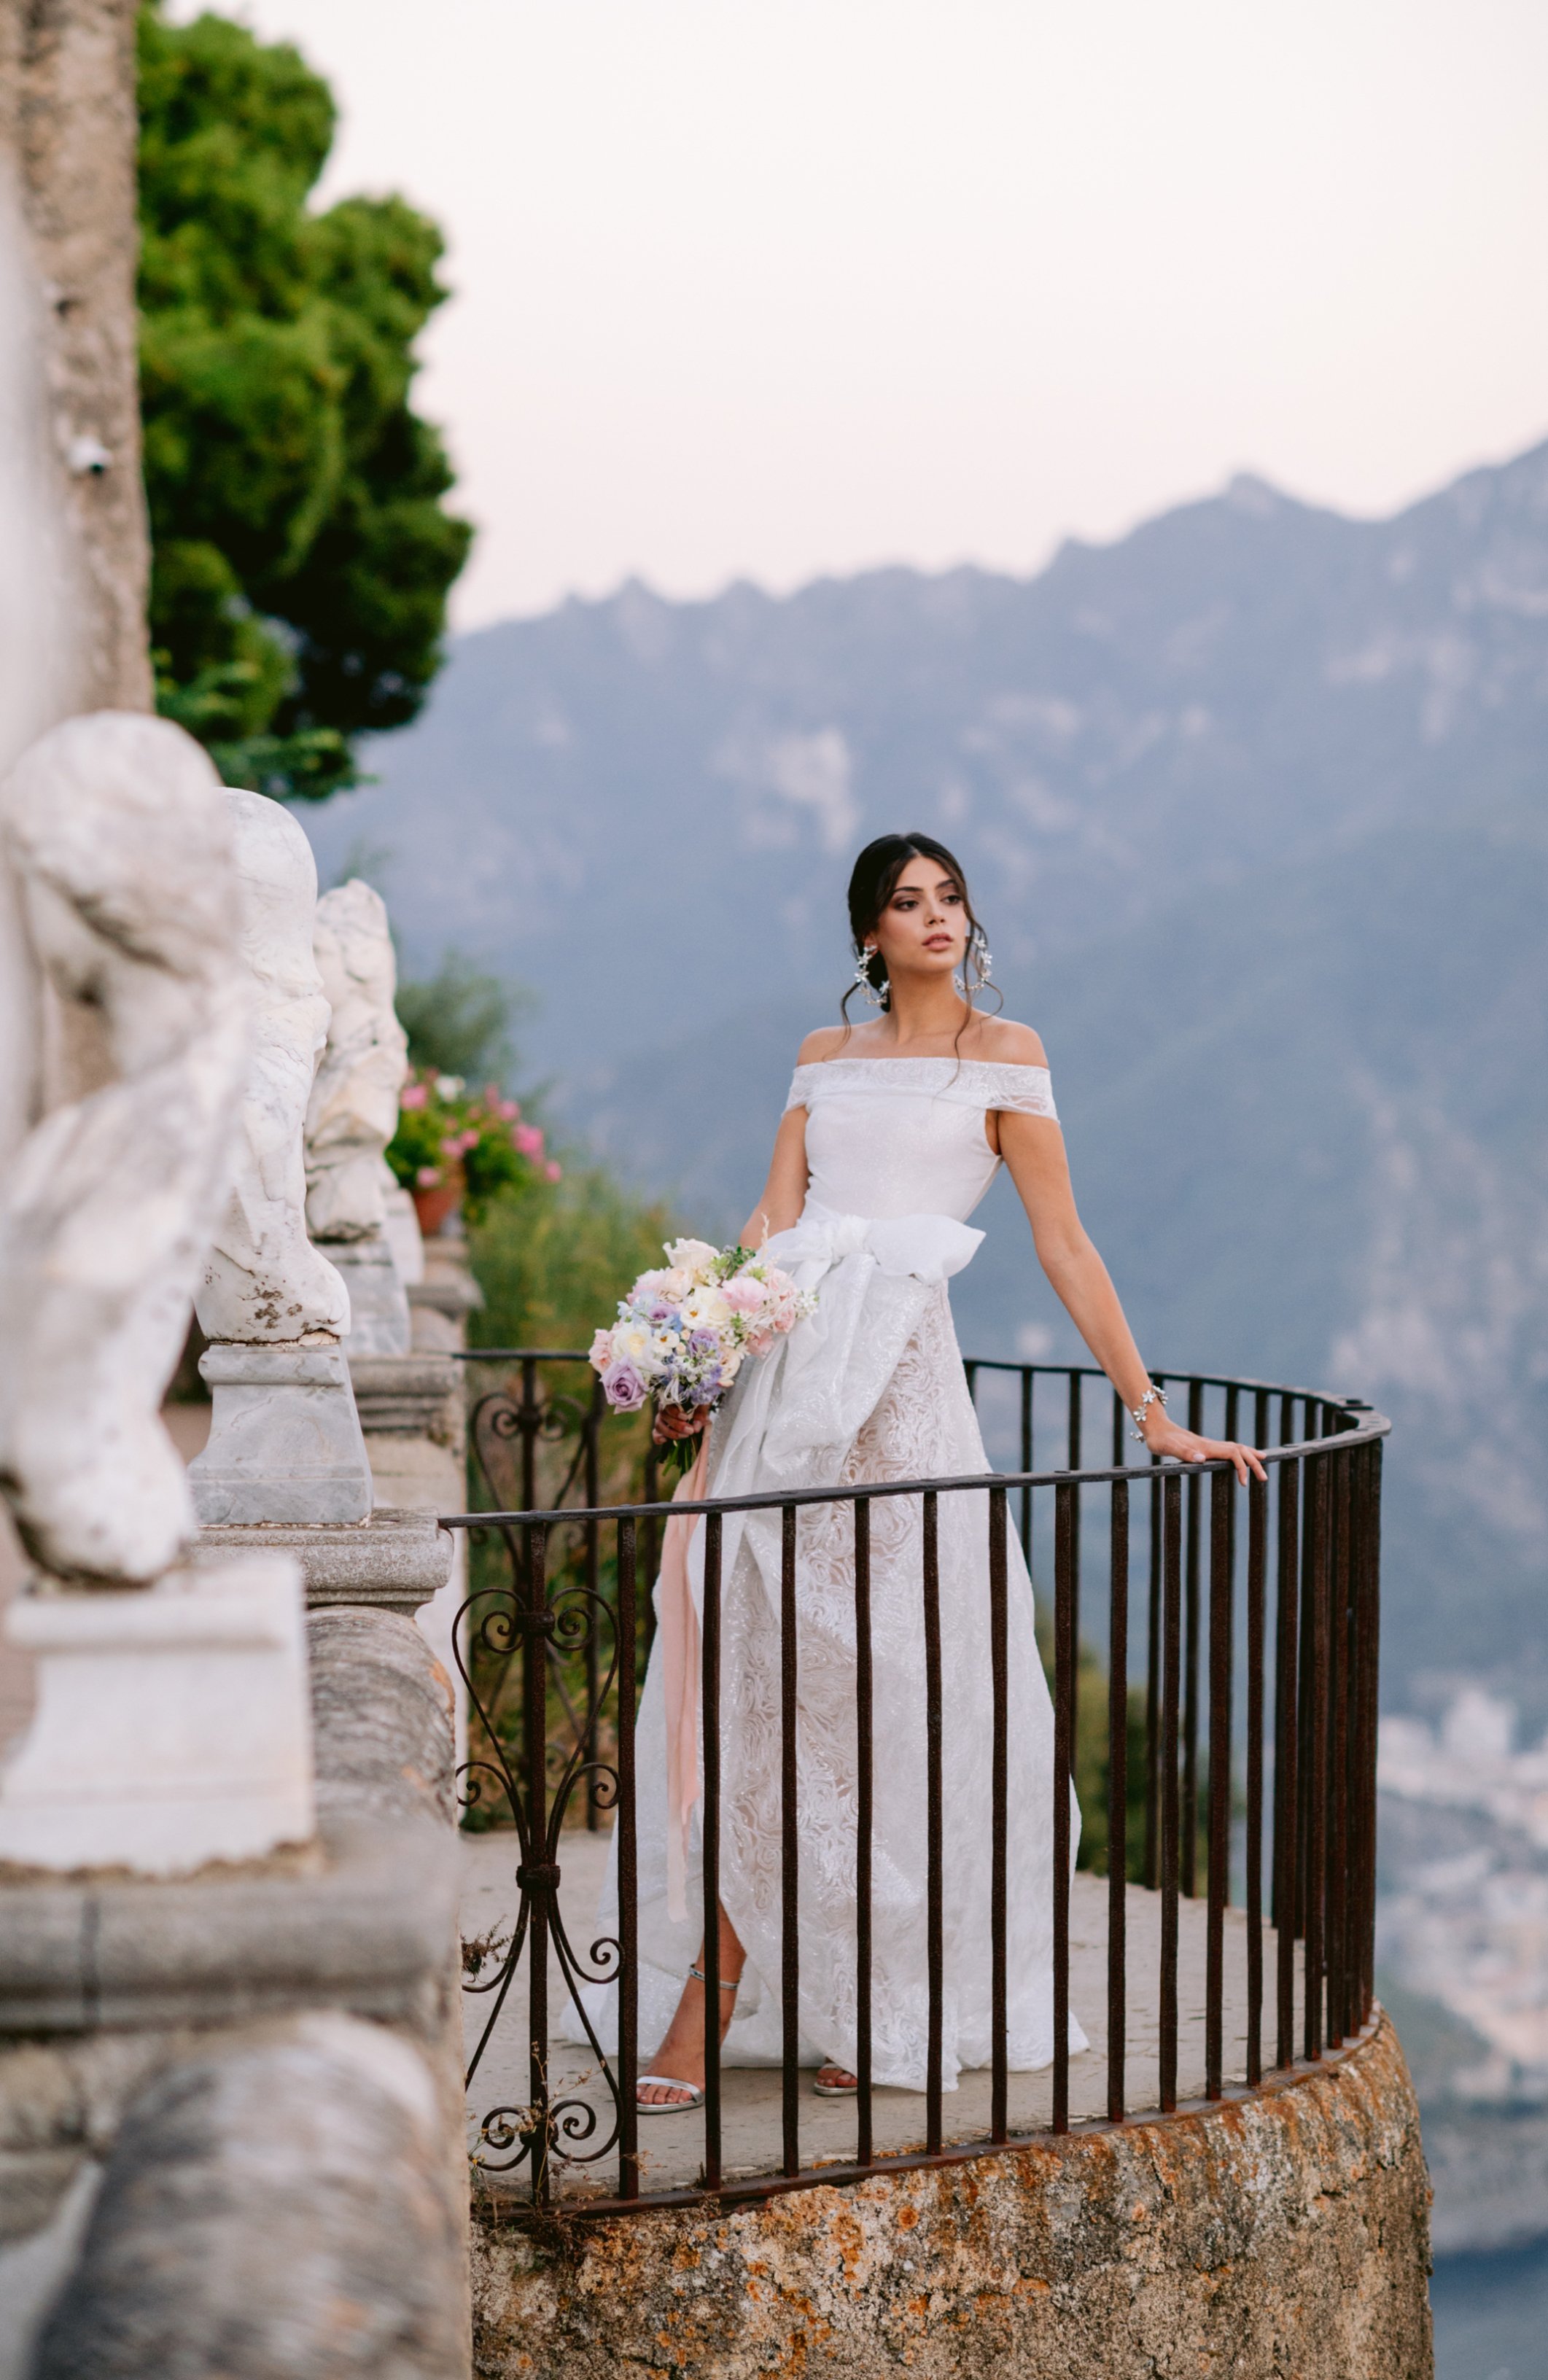 villa-cimbrone-wedding-destination-raello-italy-events-by-paulina-148.JPG